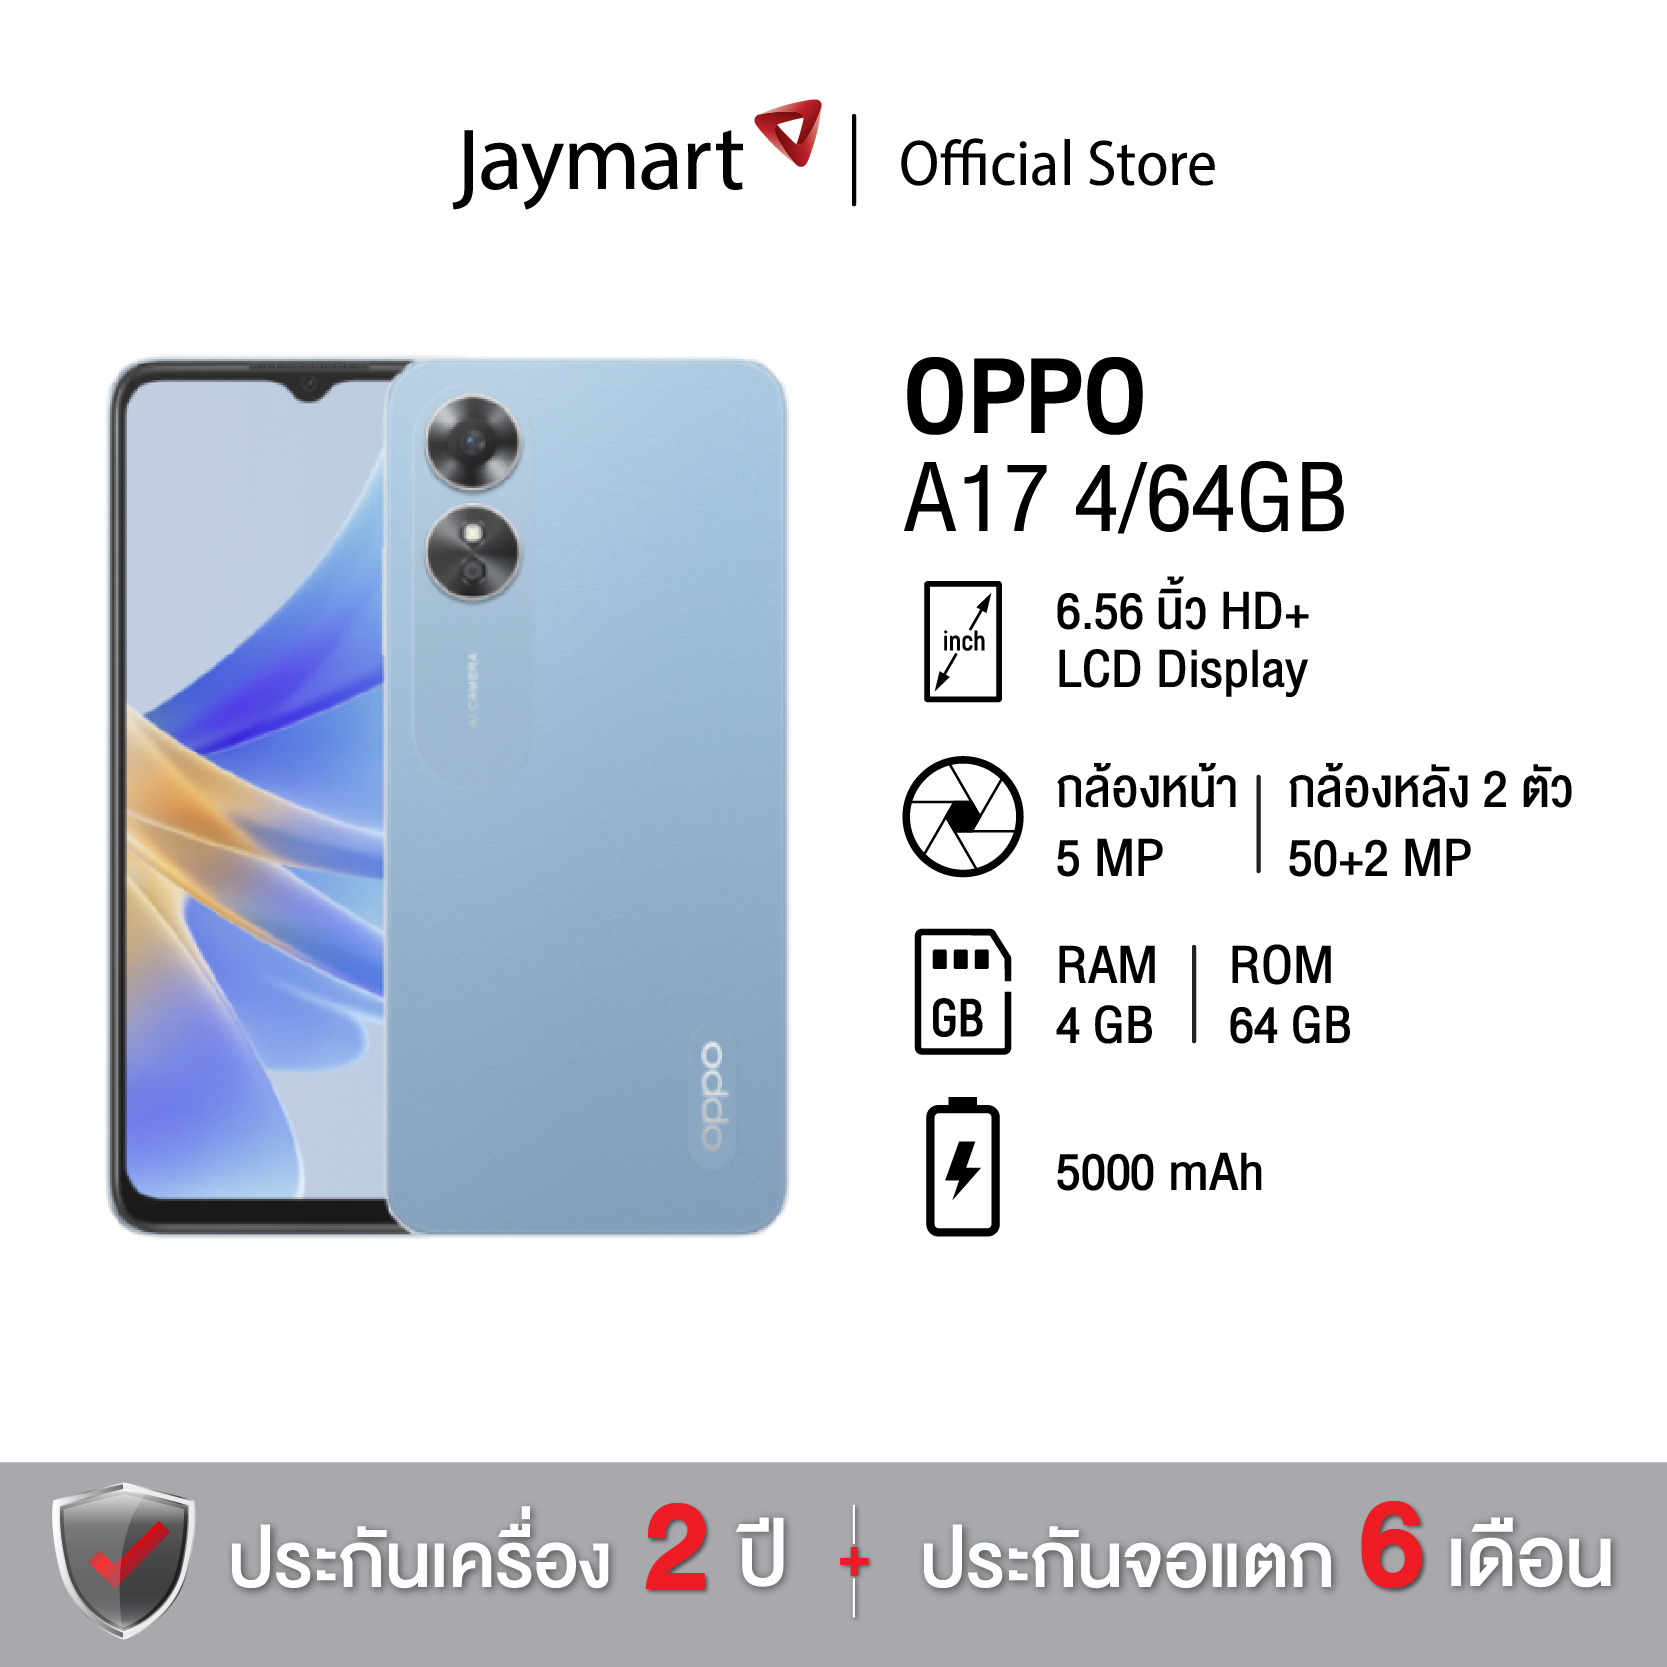 OPPO A17 4/64GB (รับประกันศูนย์ 1 ปี) By Jaymart